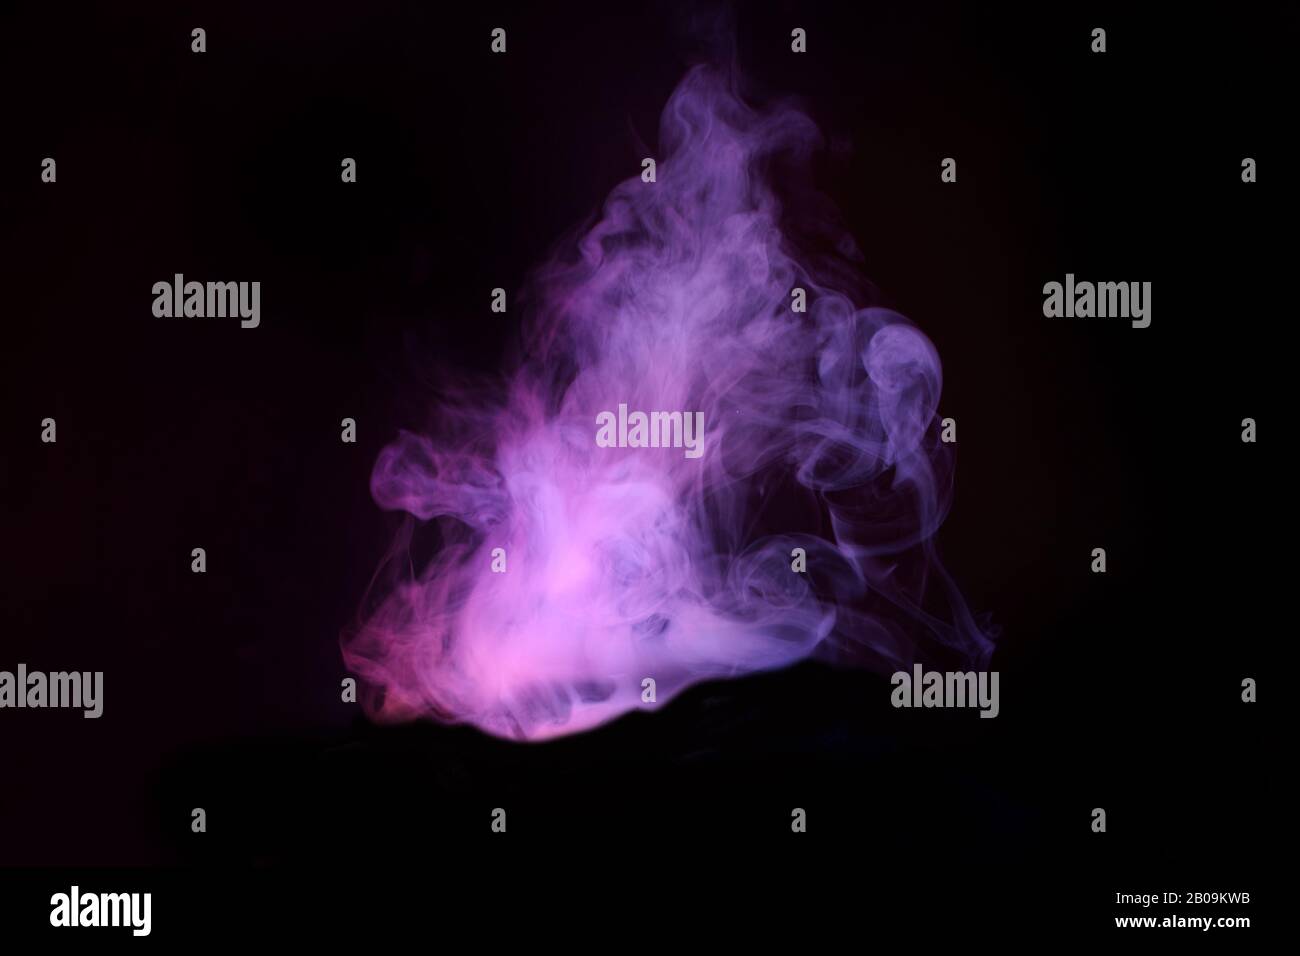 Abstract neon light smoke effect on black background. Smoke cloud explosion. Stock Photo